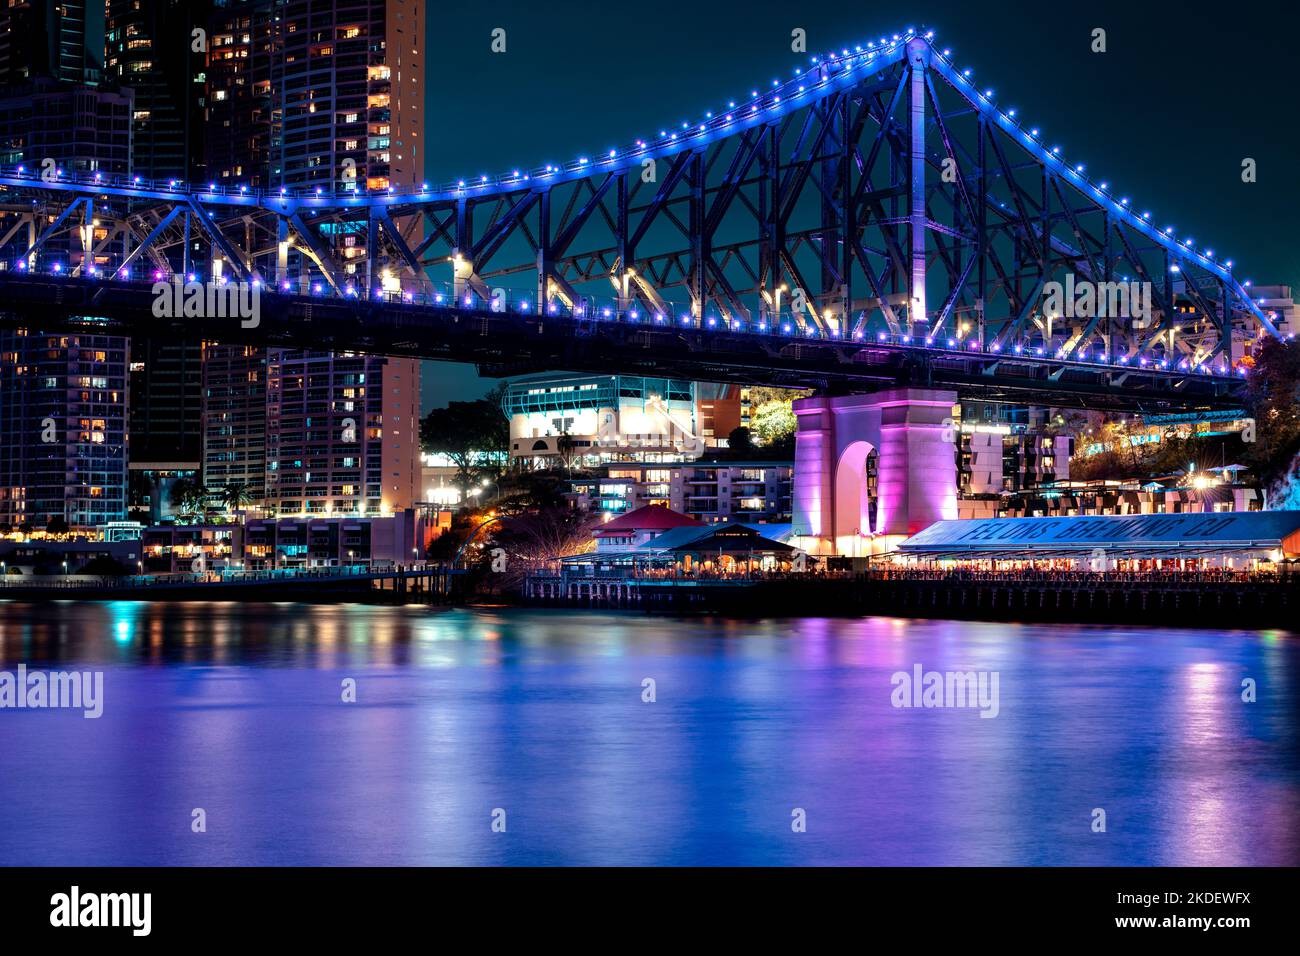 Heritage-listed Story Bridge in Brisbane. Stock Photo